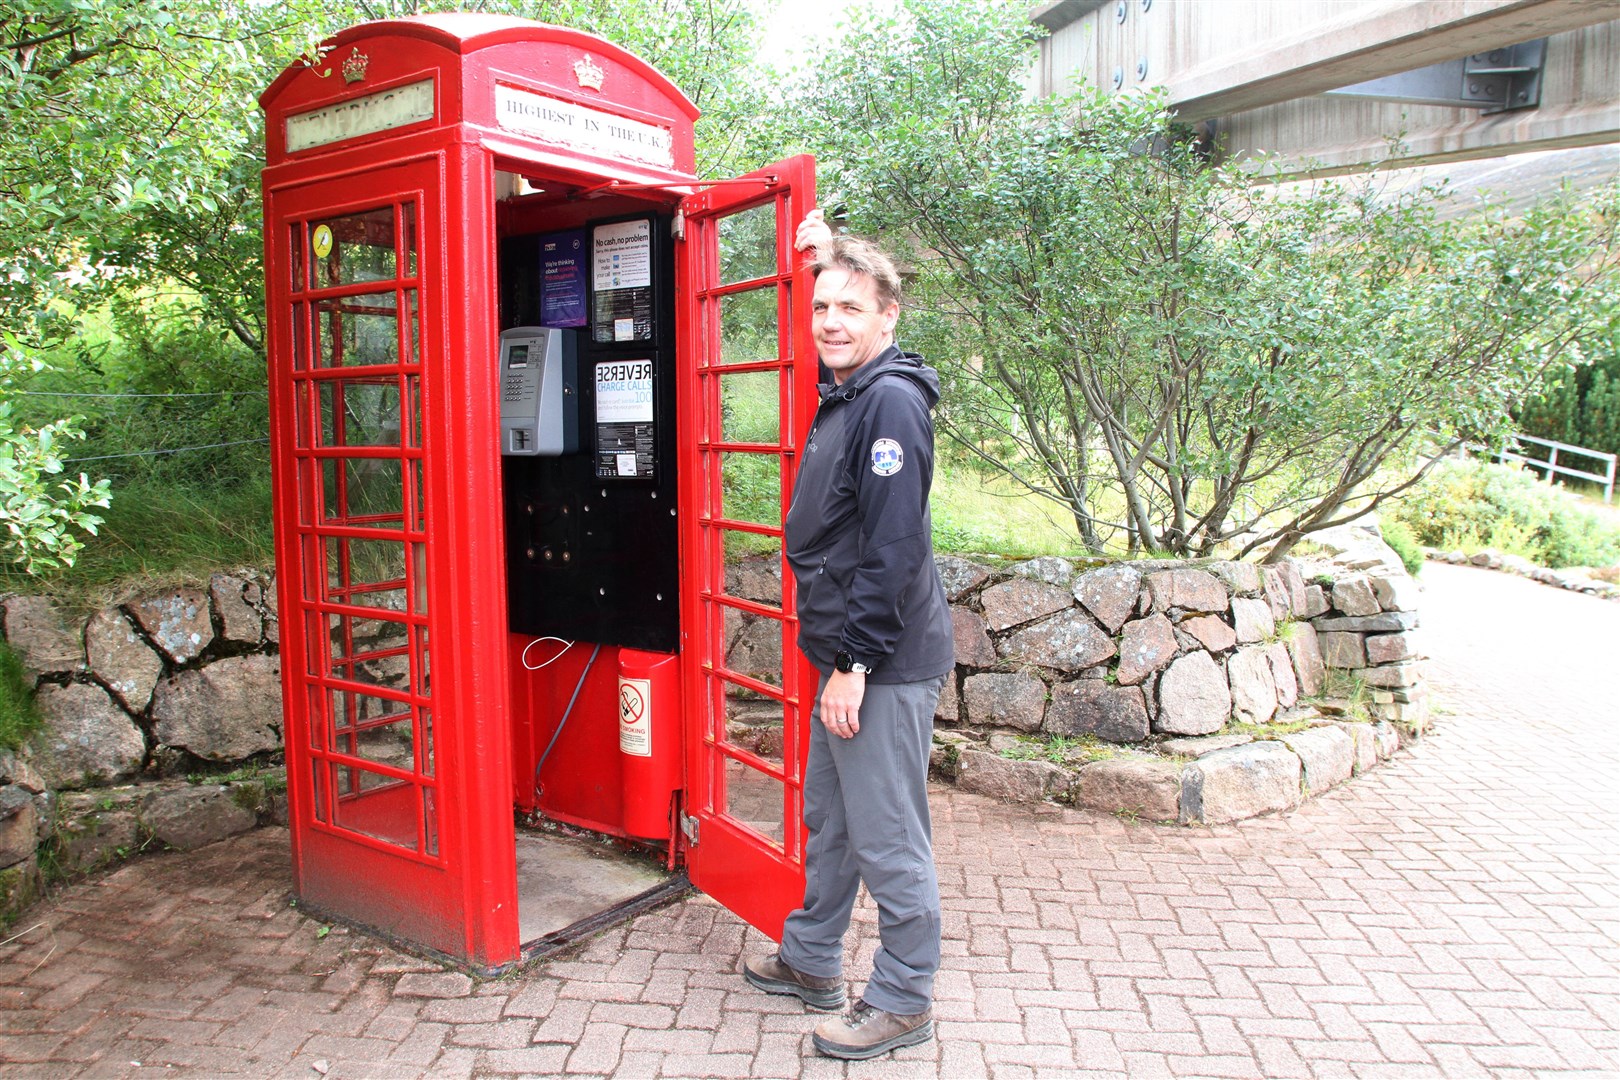 Cairngorm ranger Ruari Macdonald with the popular red phone box at Cairngorm Mountain.